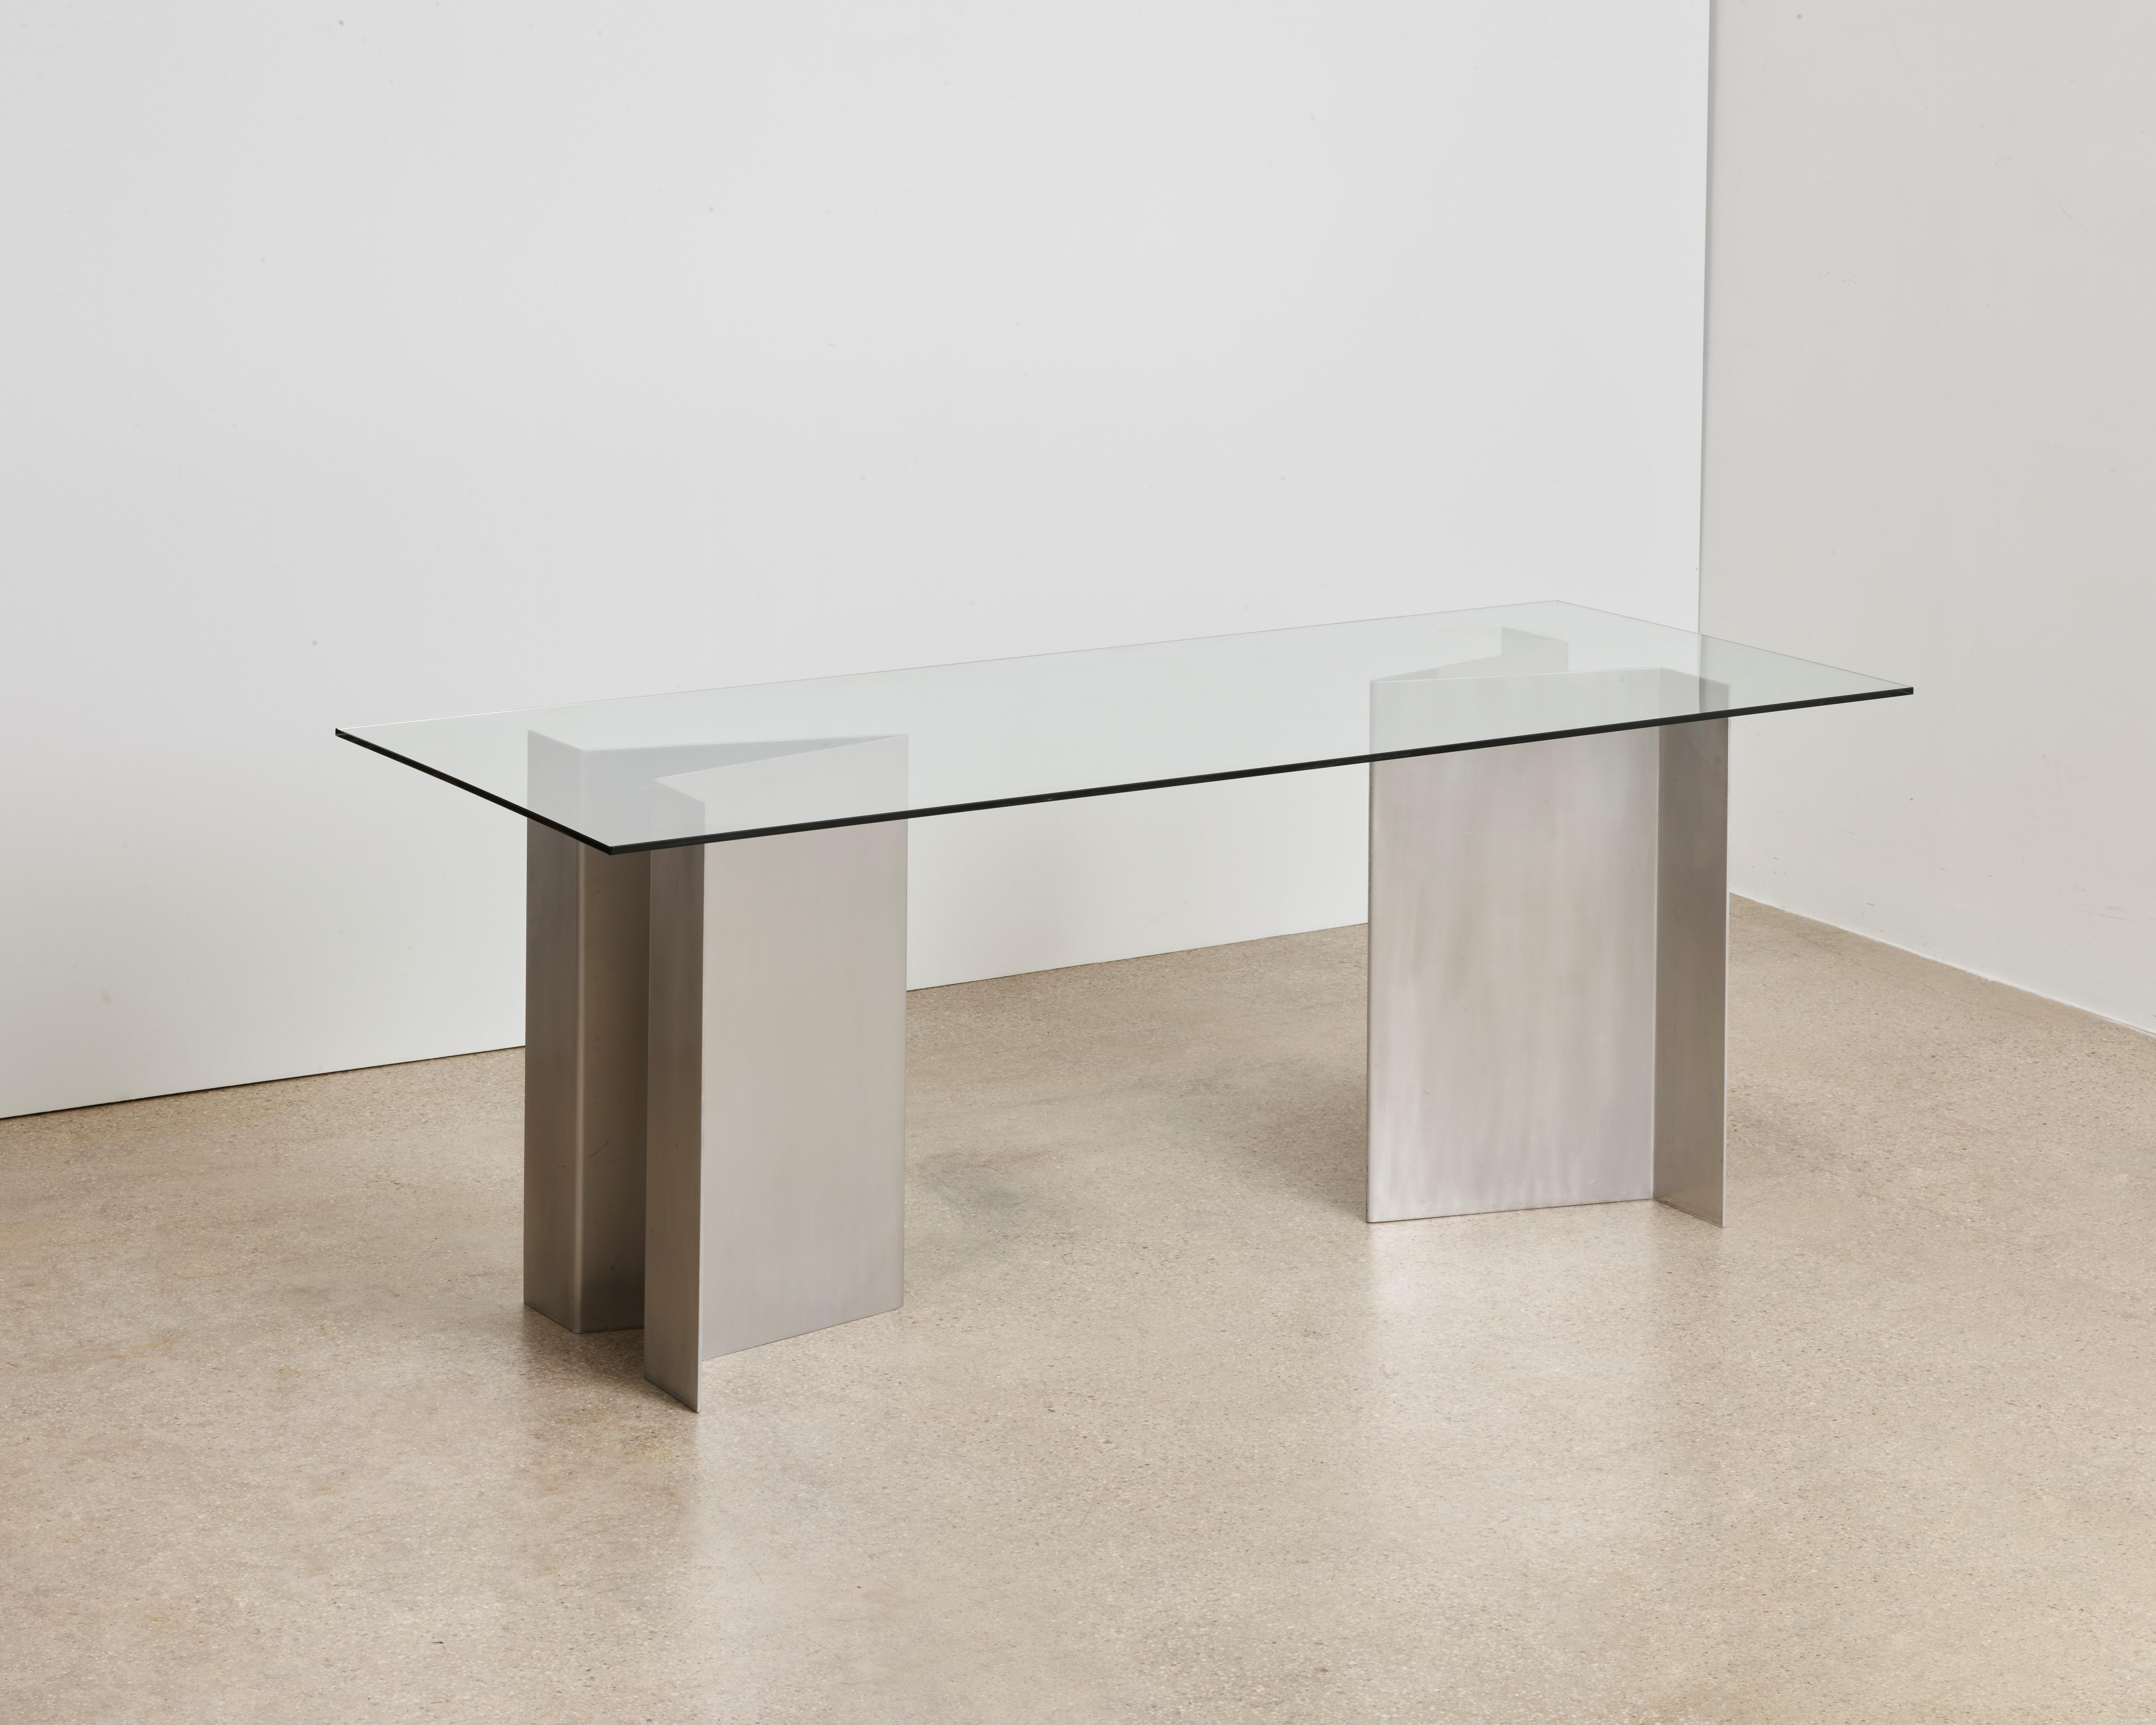 Pica table by Umberto Bellardi Ricci
Dimensions: D 30